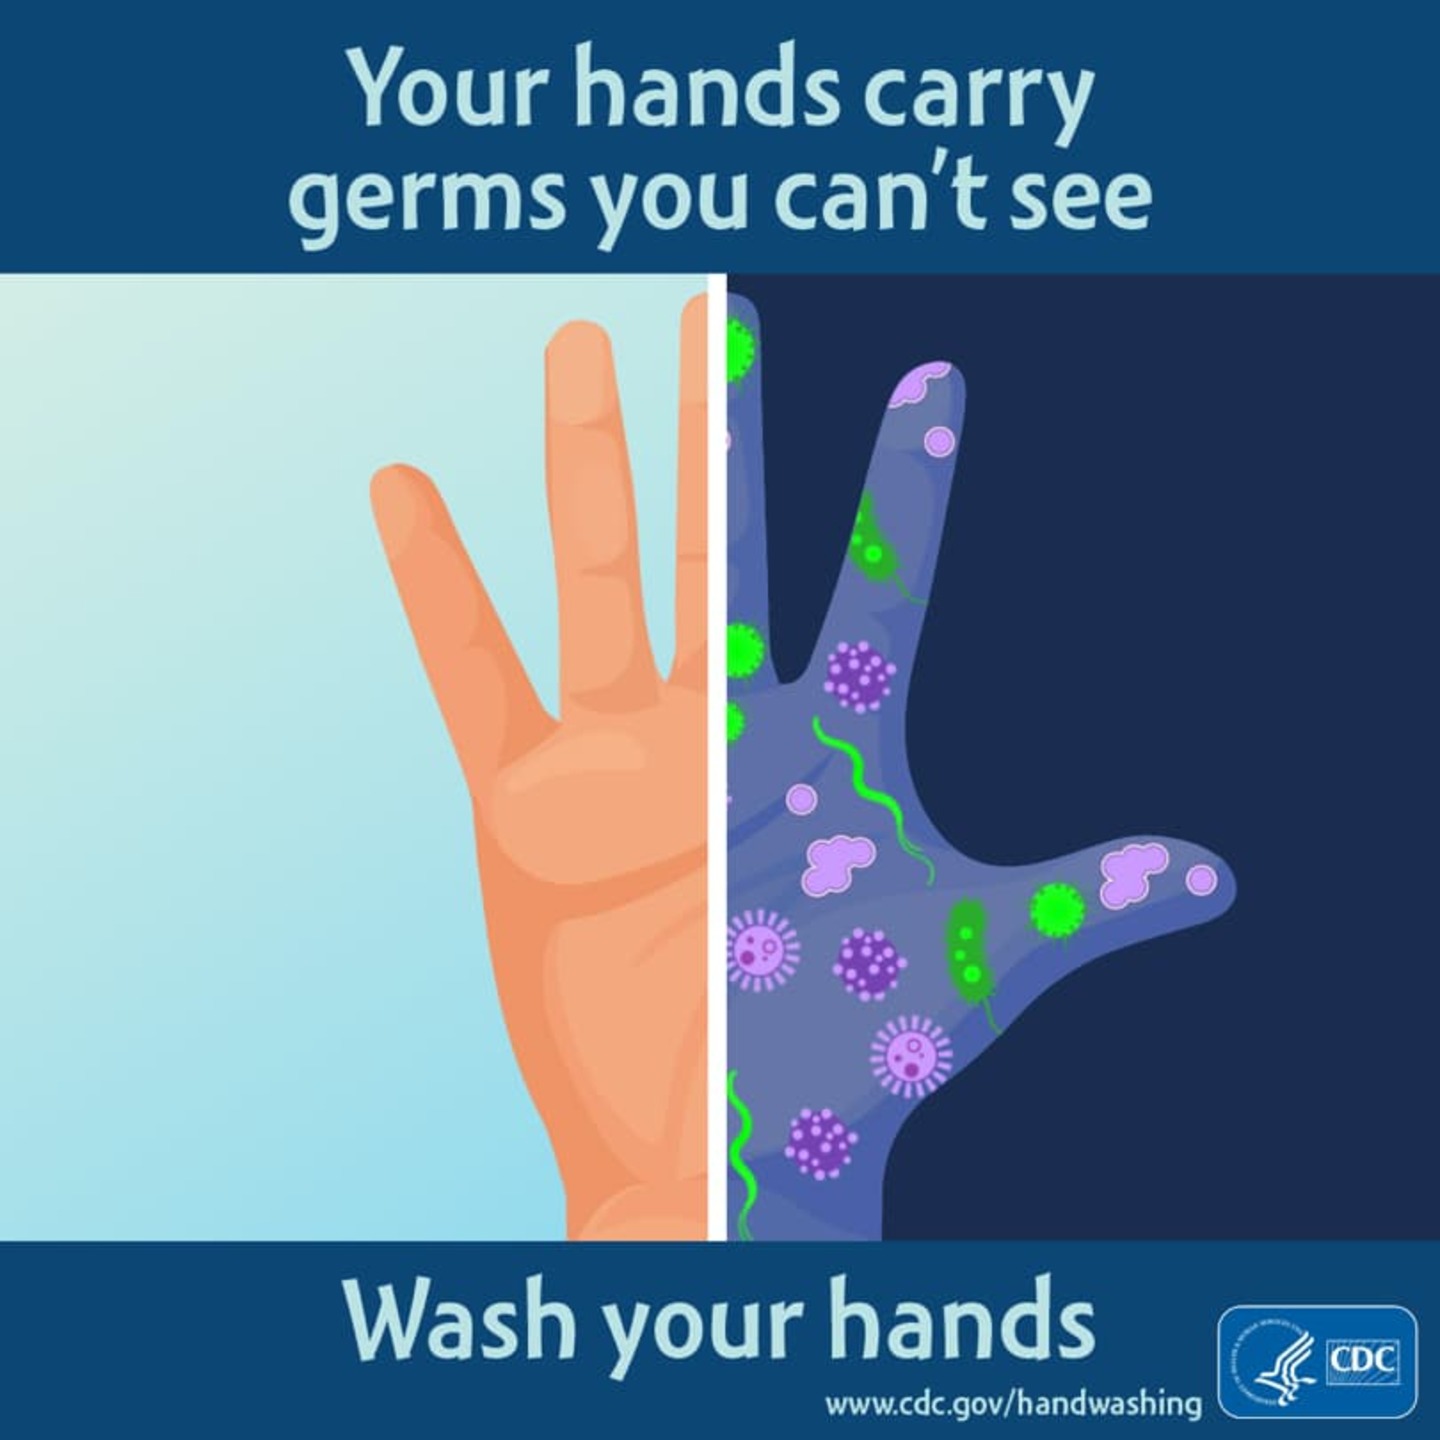 Handwashing keeps you healthy